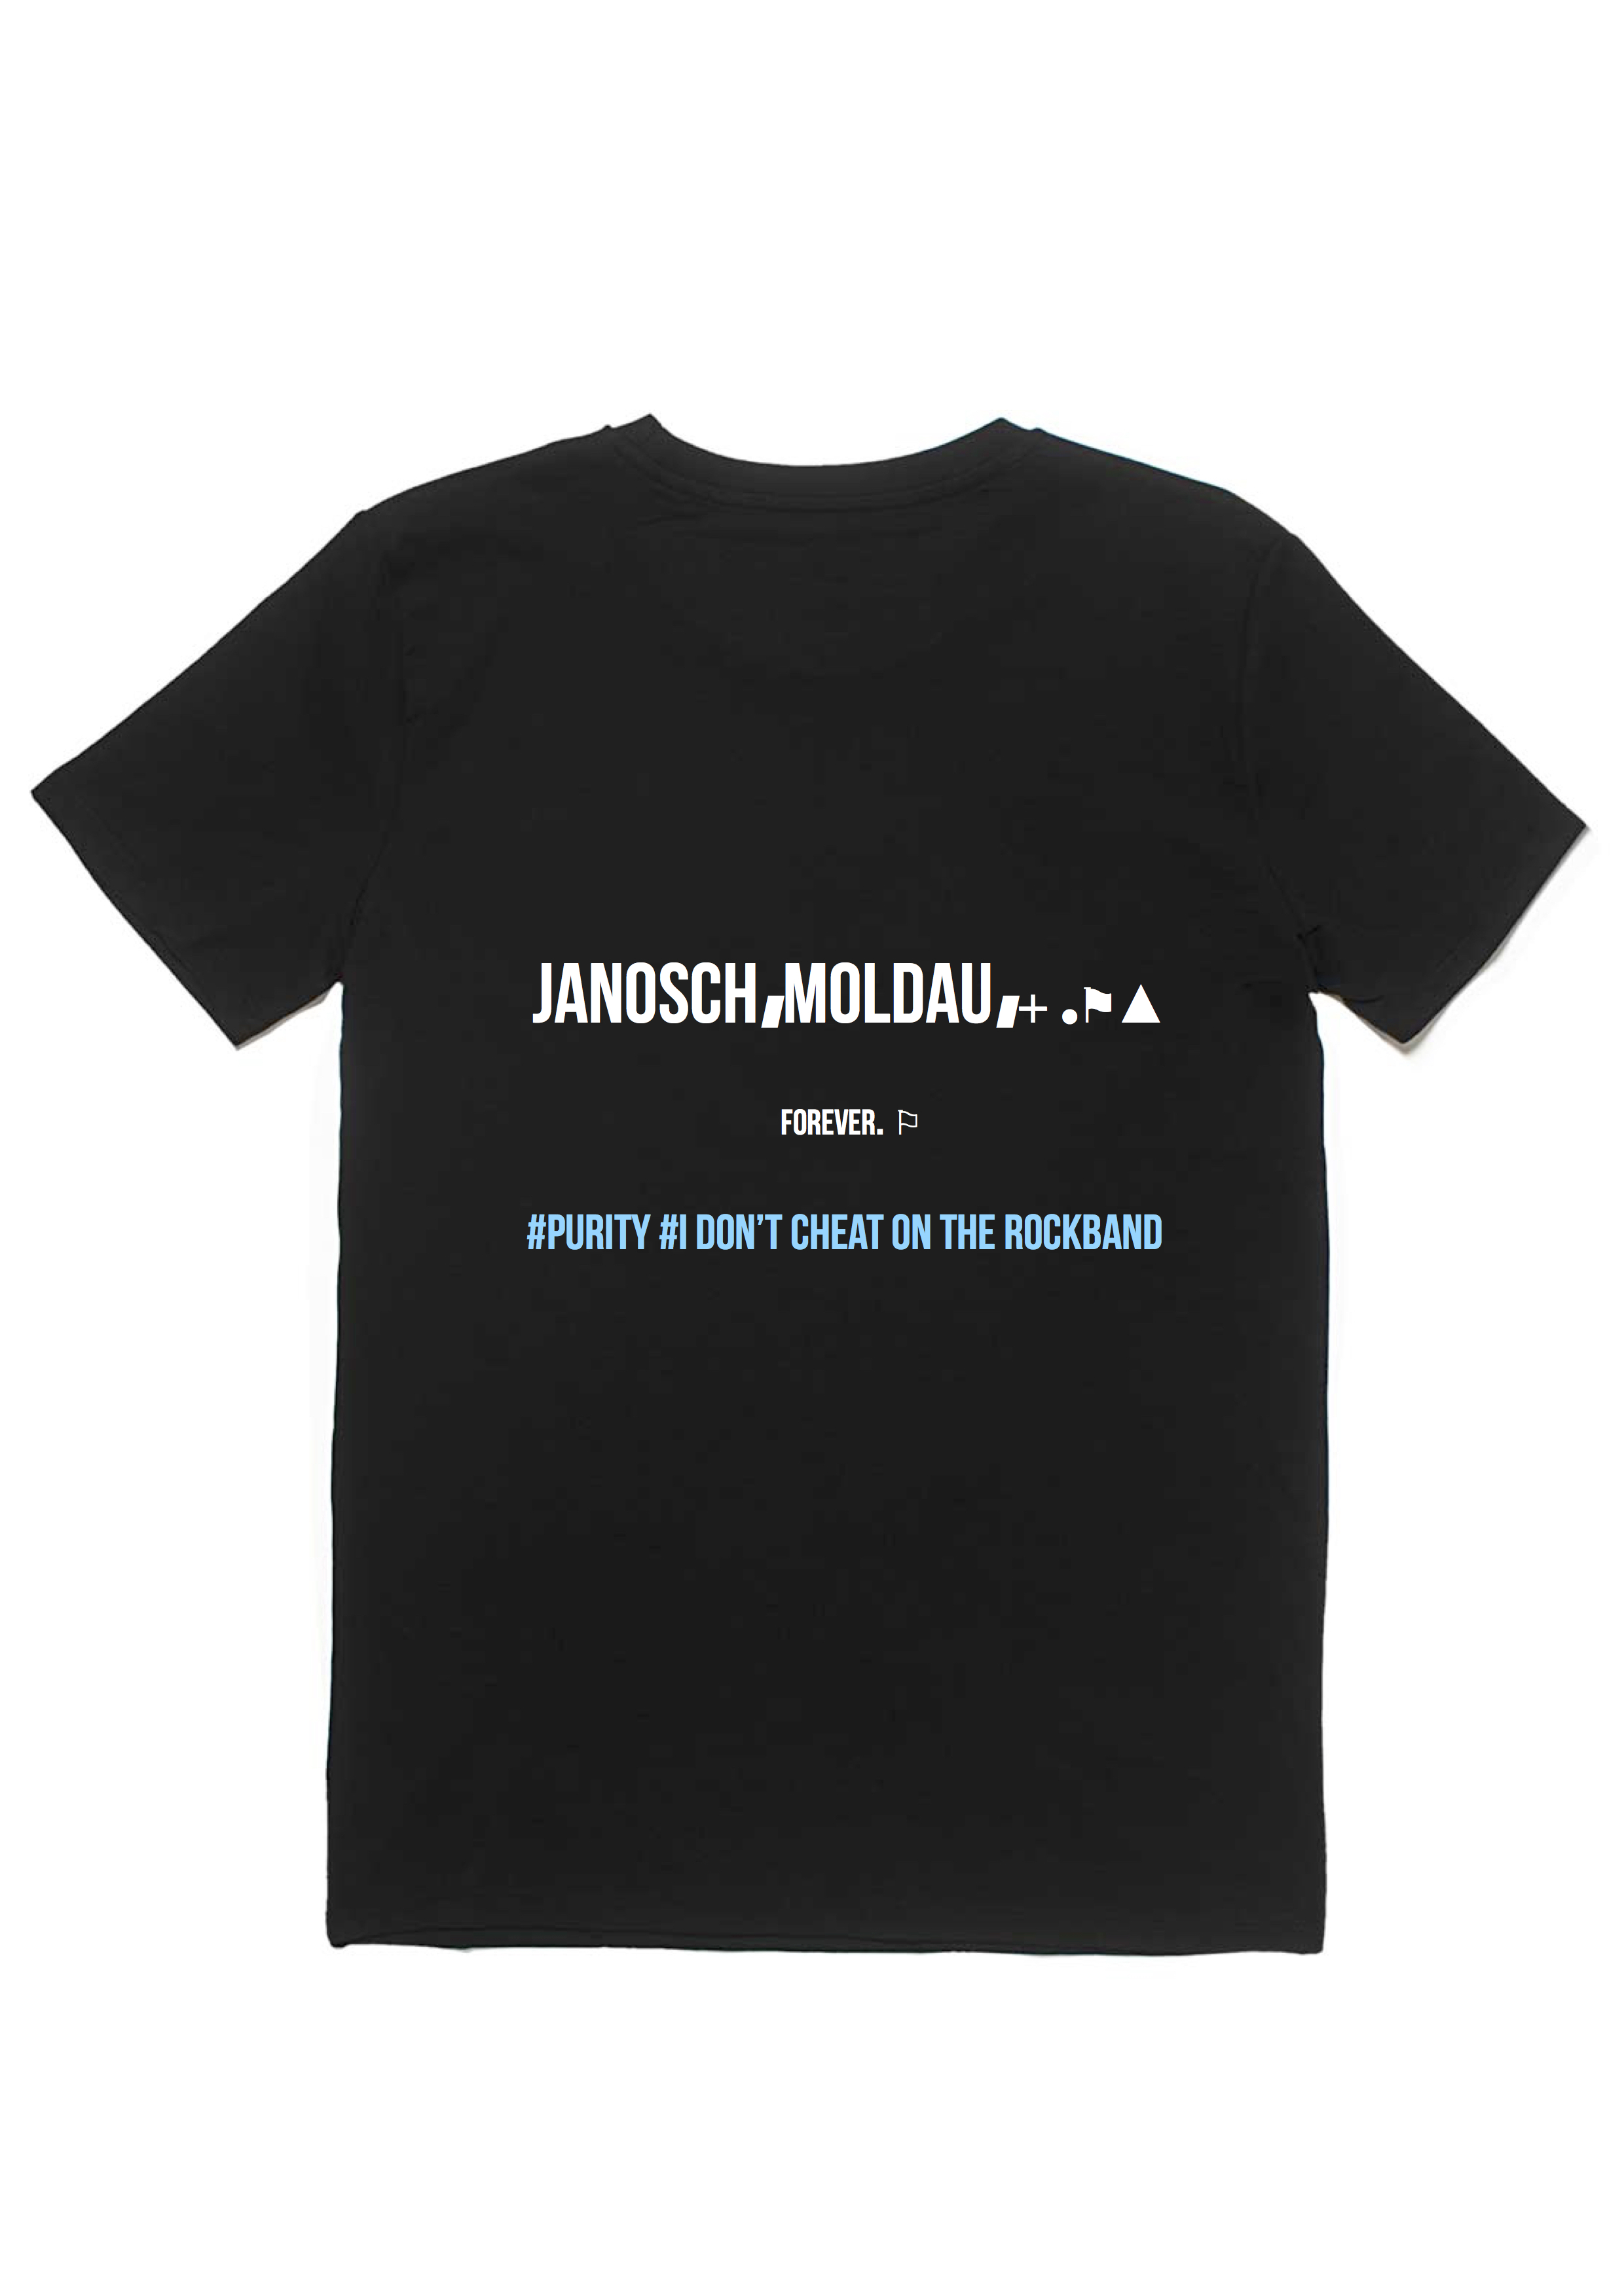 jm purity tshirt (special fanclub edition)